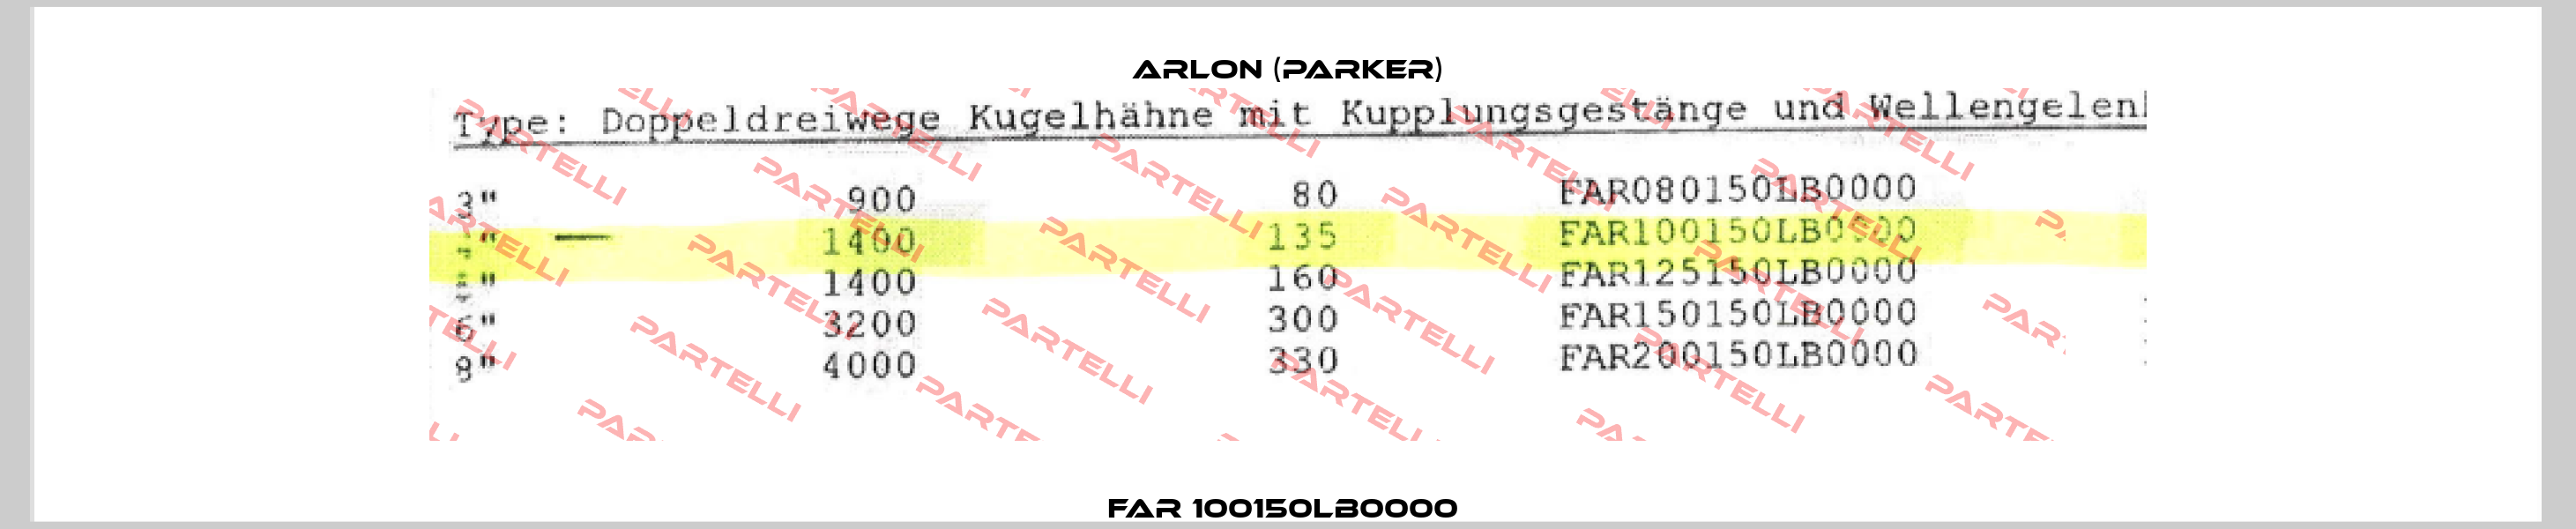 FAR 100150LB0000  Arlon (Parker)